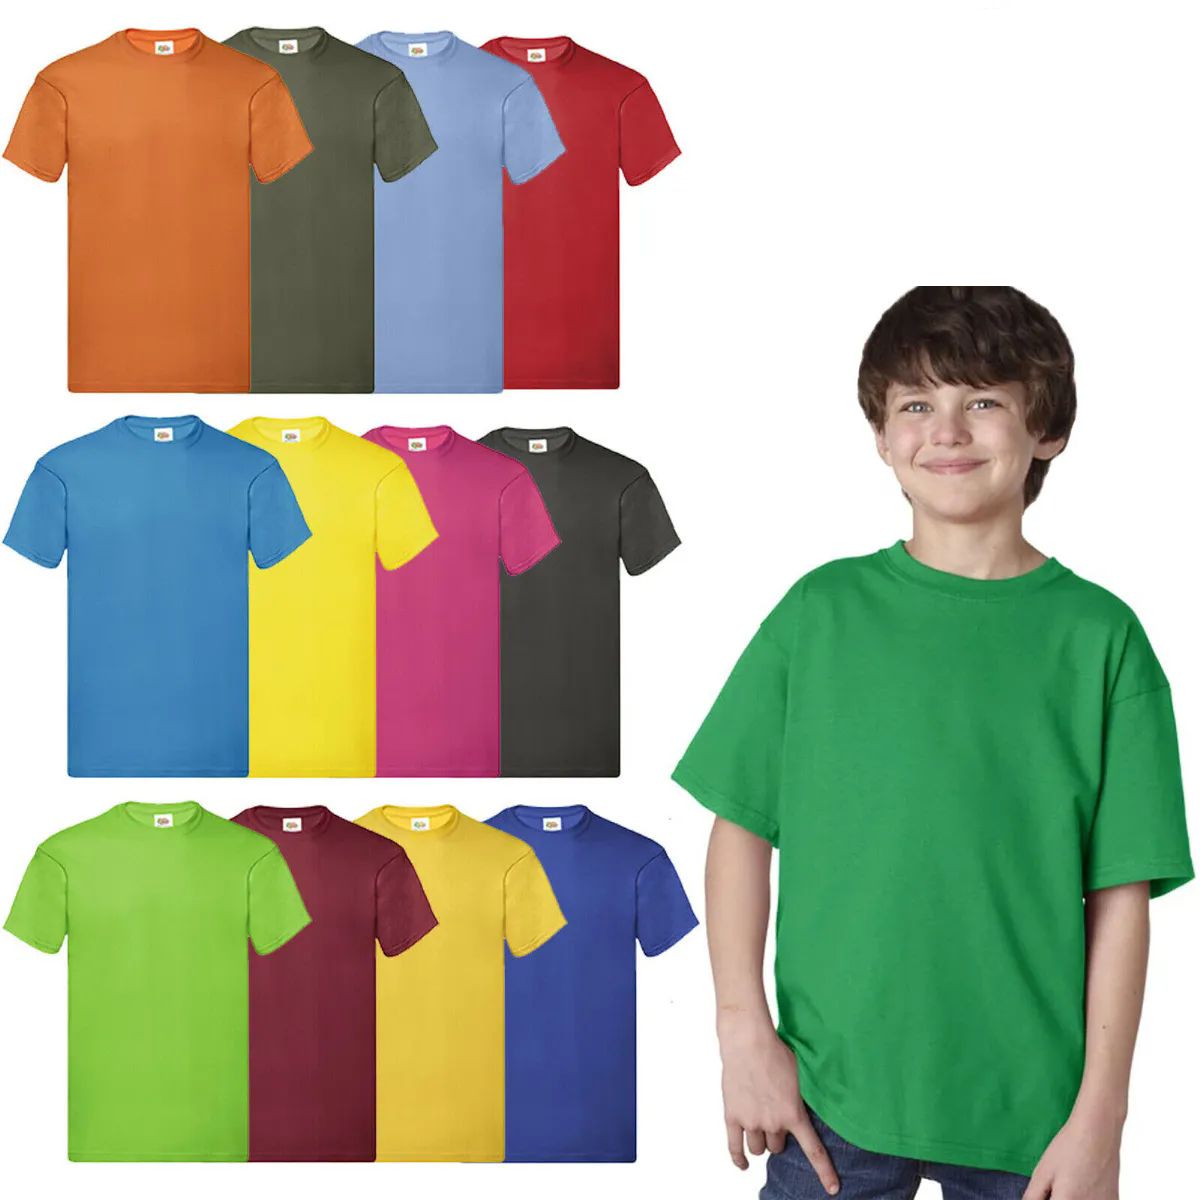 504 Bulk Billion Hats Kids Youth Cotton Assorted Colors T Shirts Size S